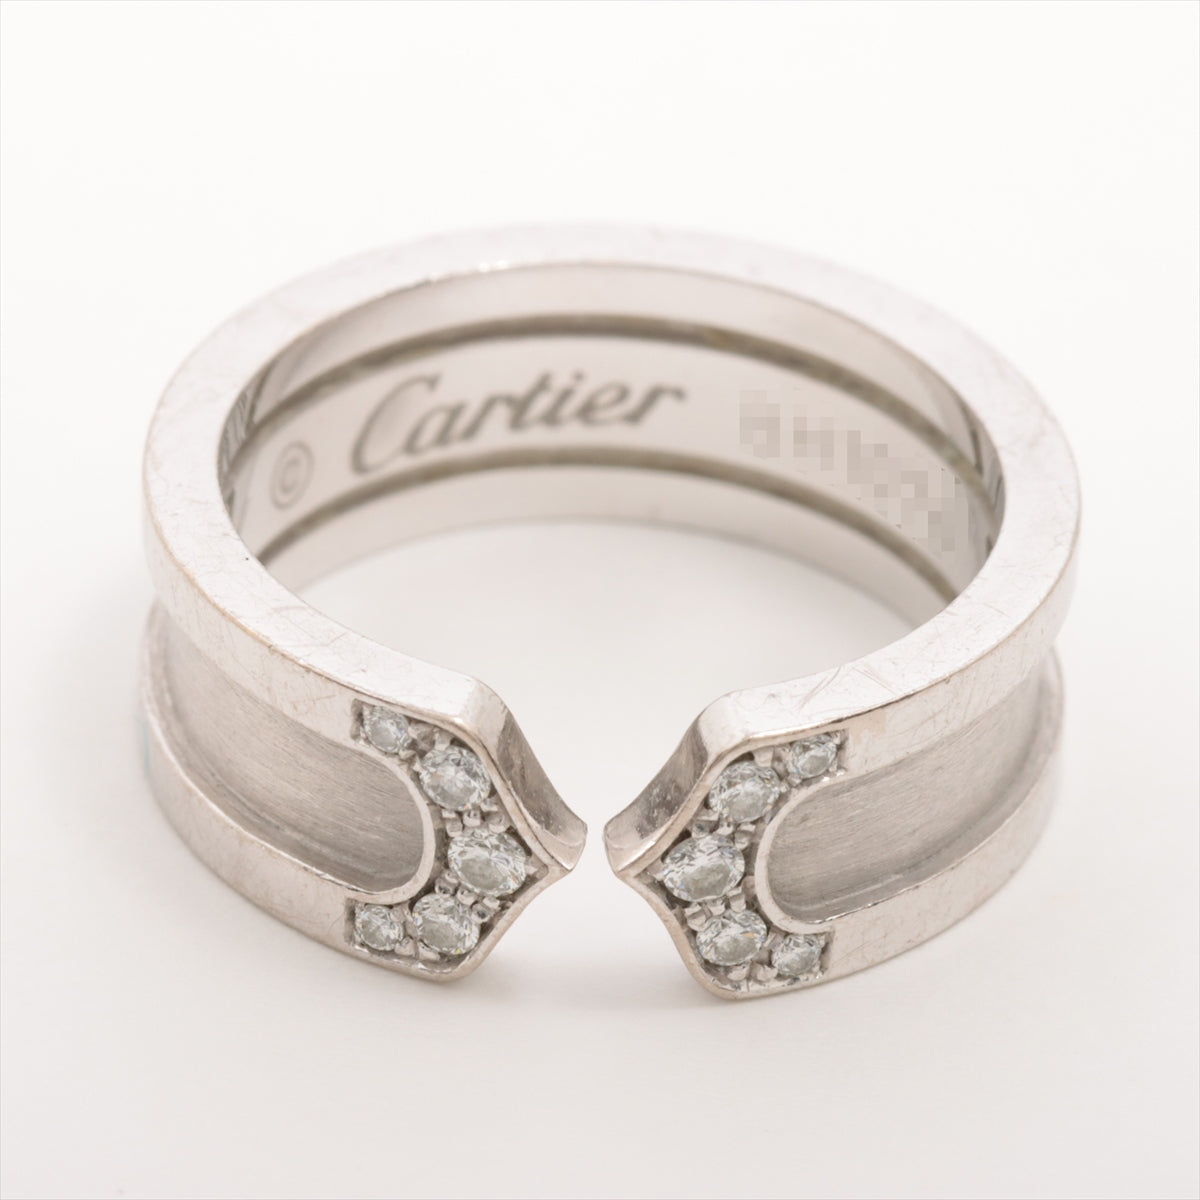 Cartier C2 Diamond Ring 750 (WG) 6.8g 49 E